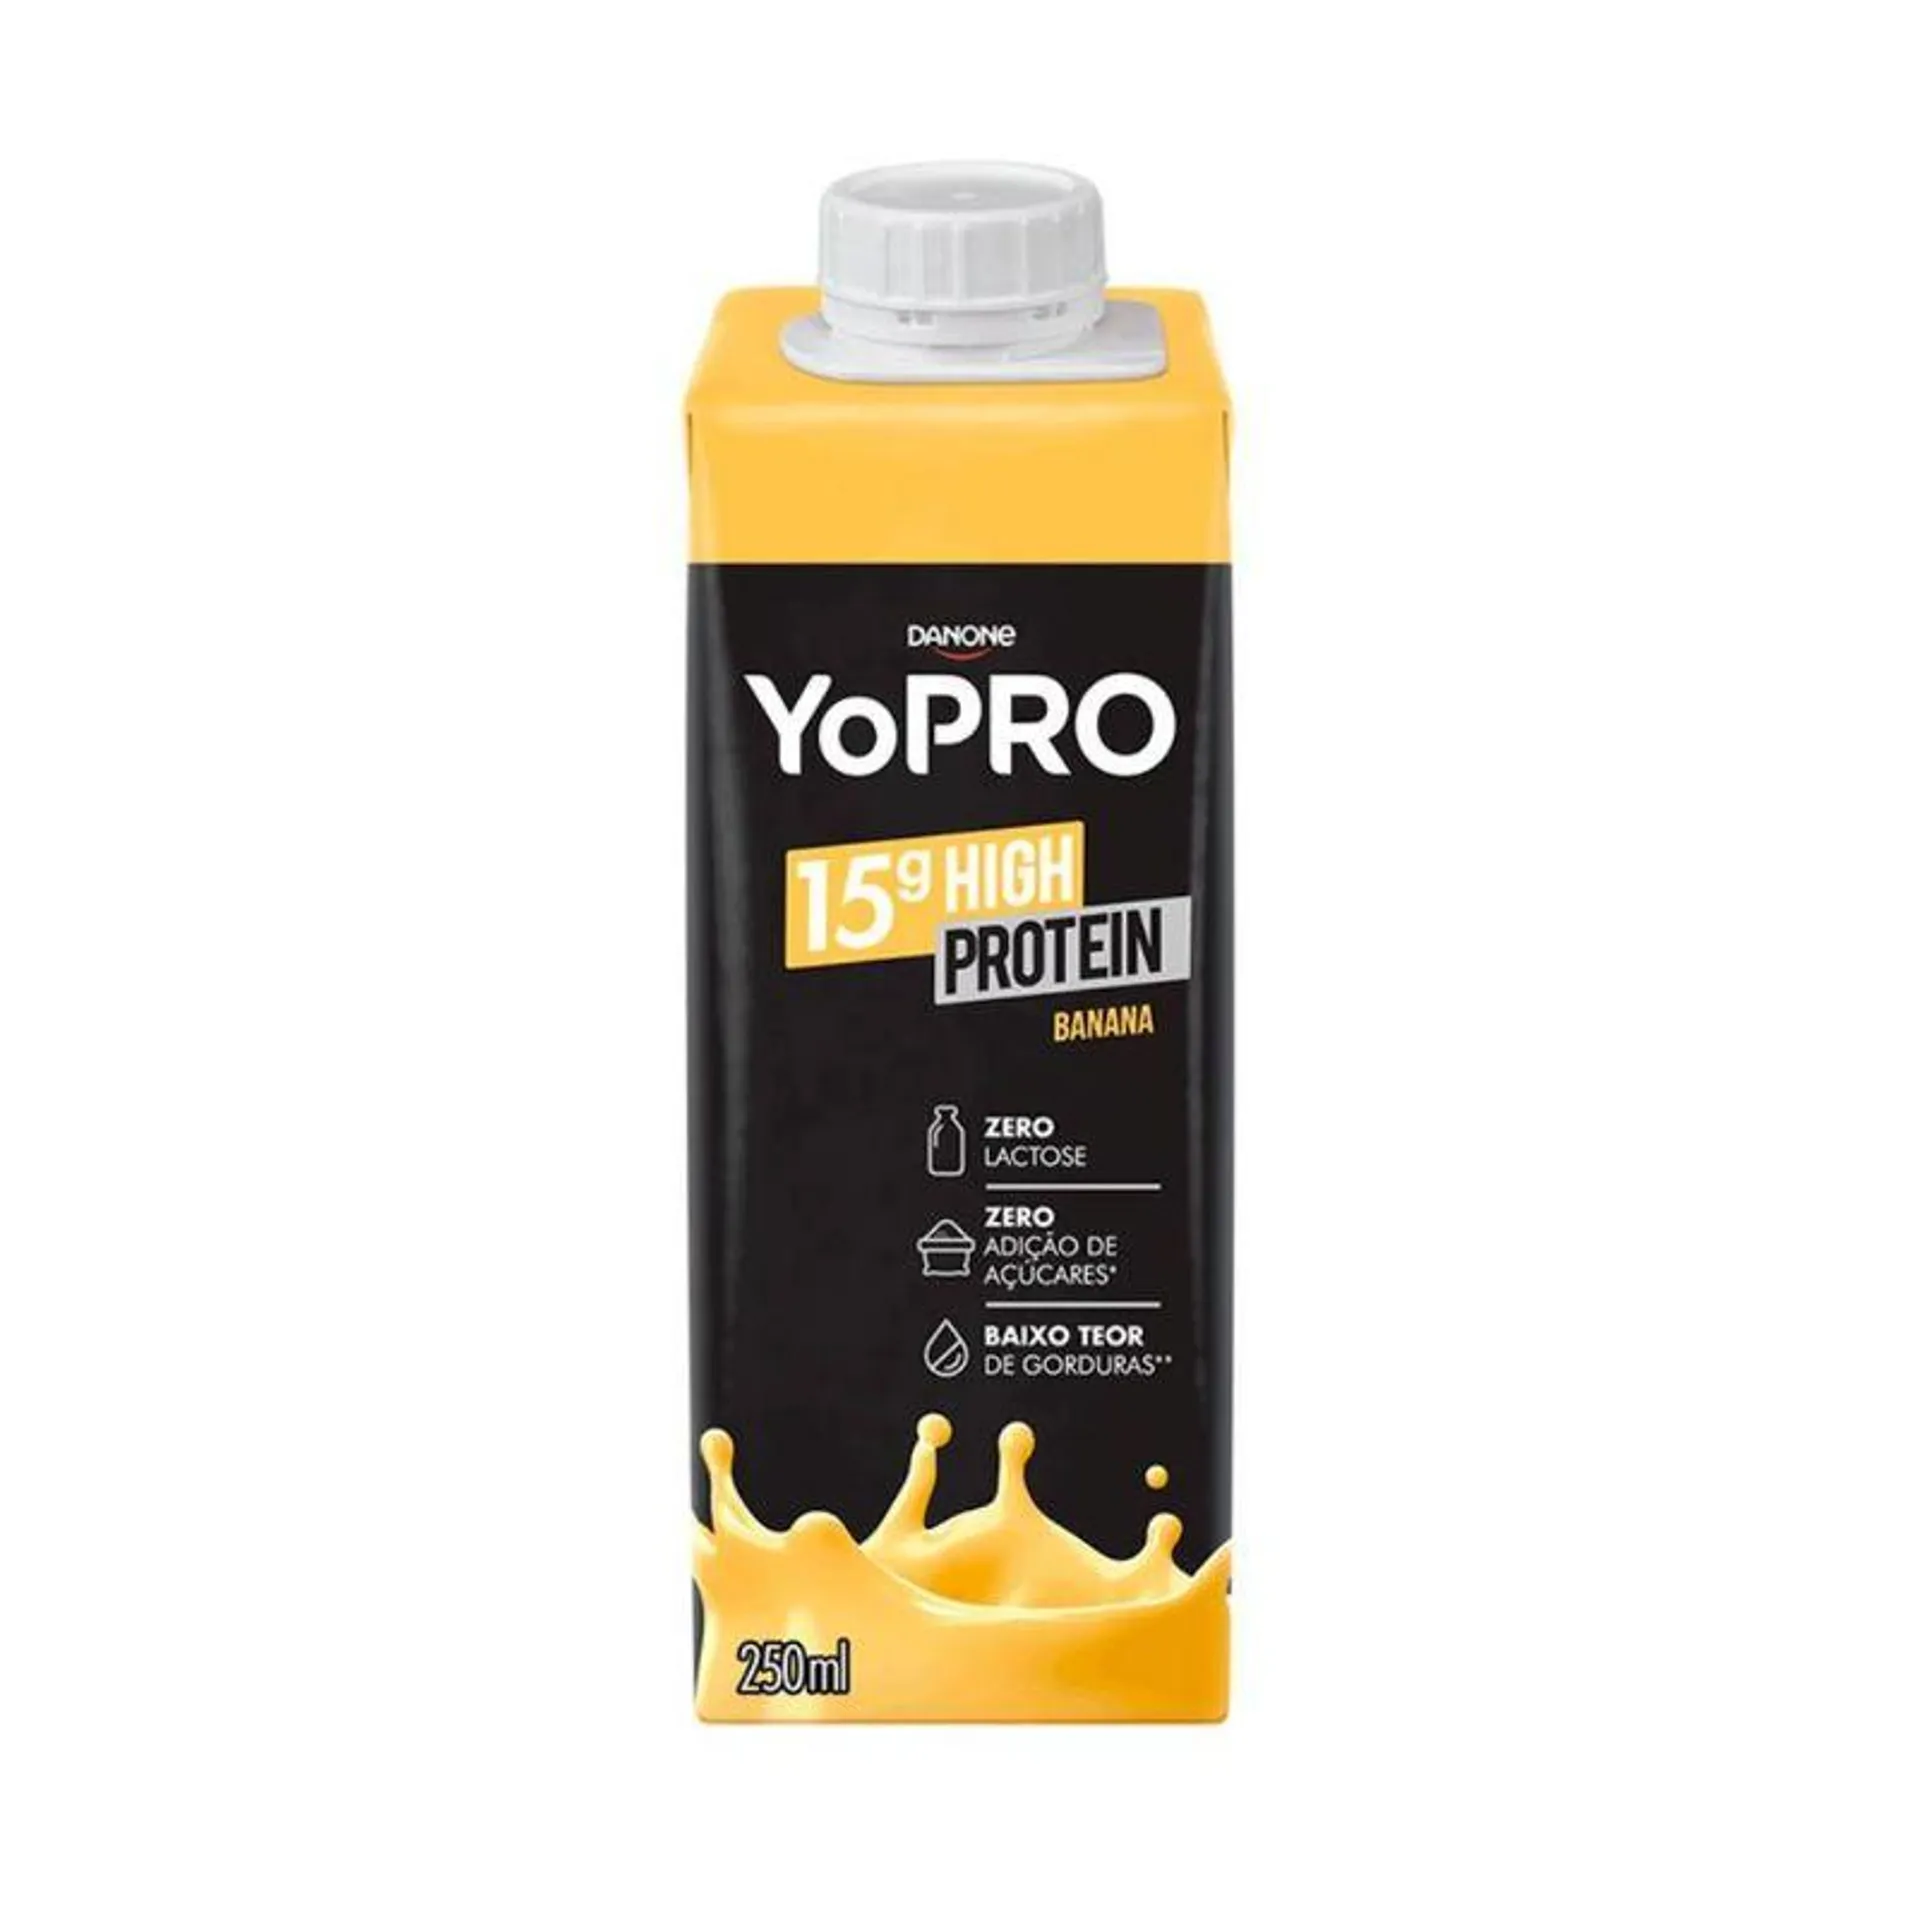 Yopro Banana – 250ml